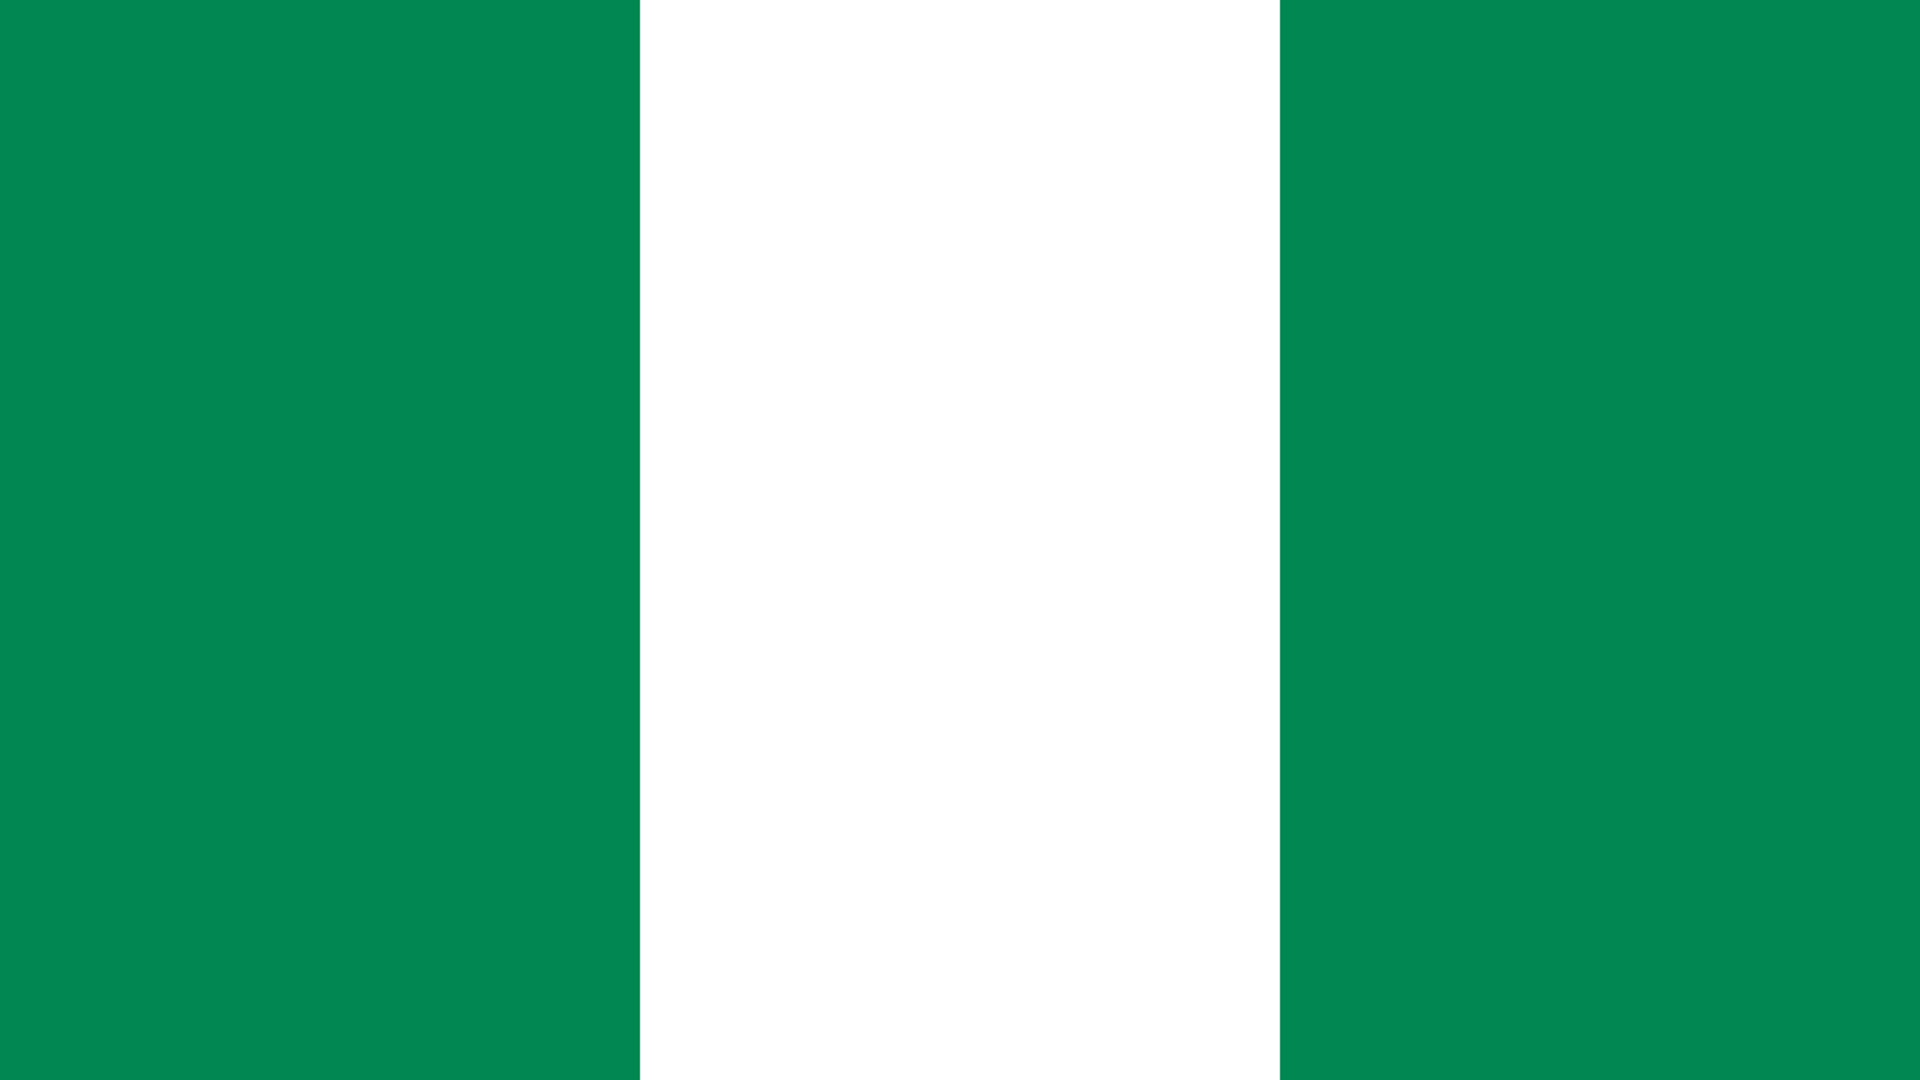 Nigeria Flag Wallpaper High Definition Quality Widescreen